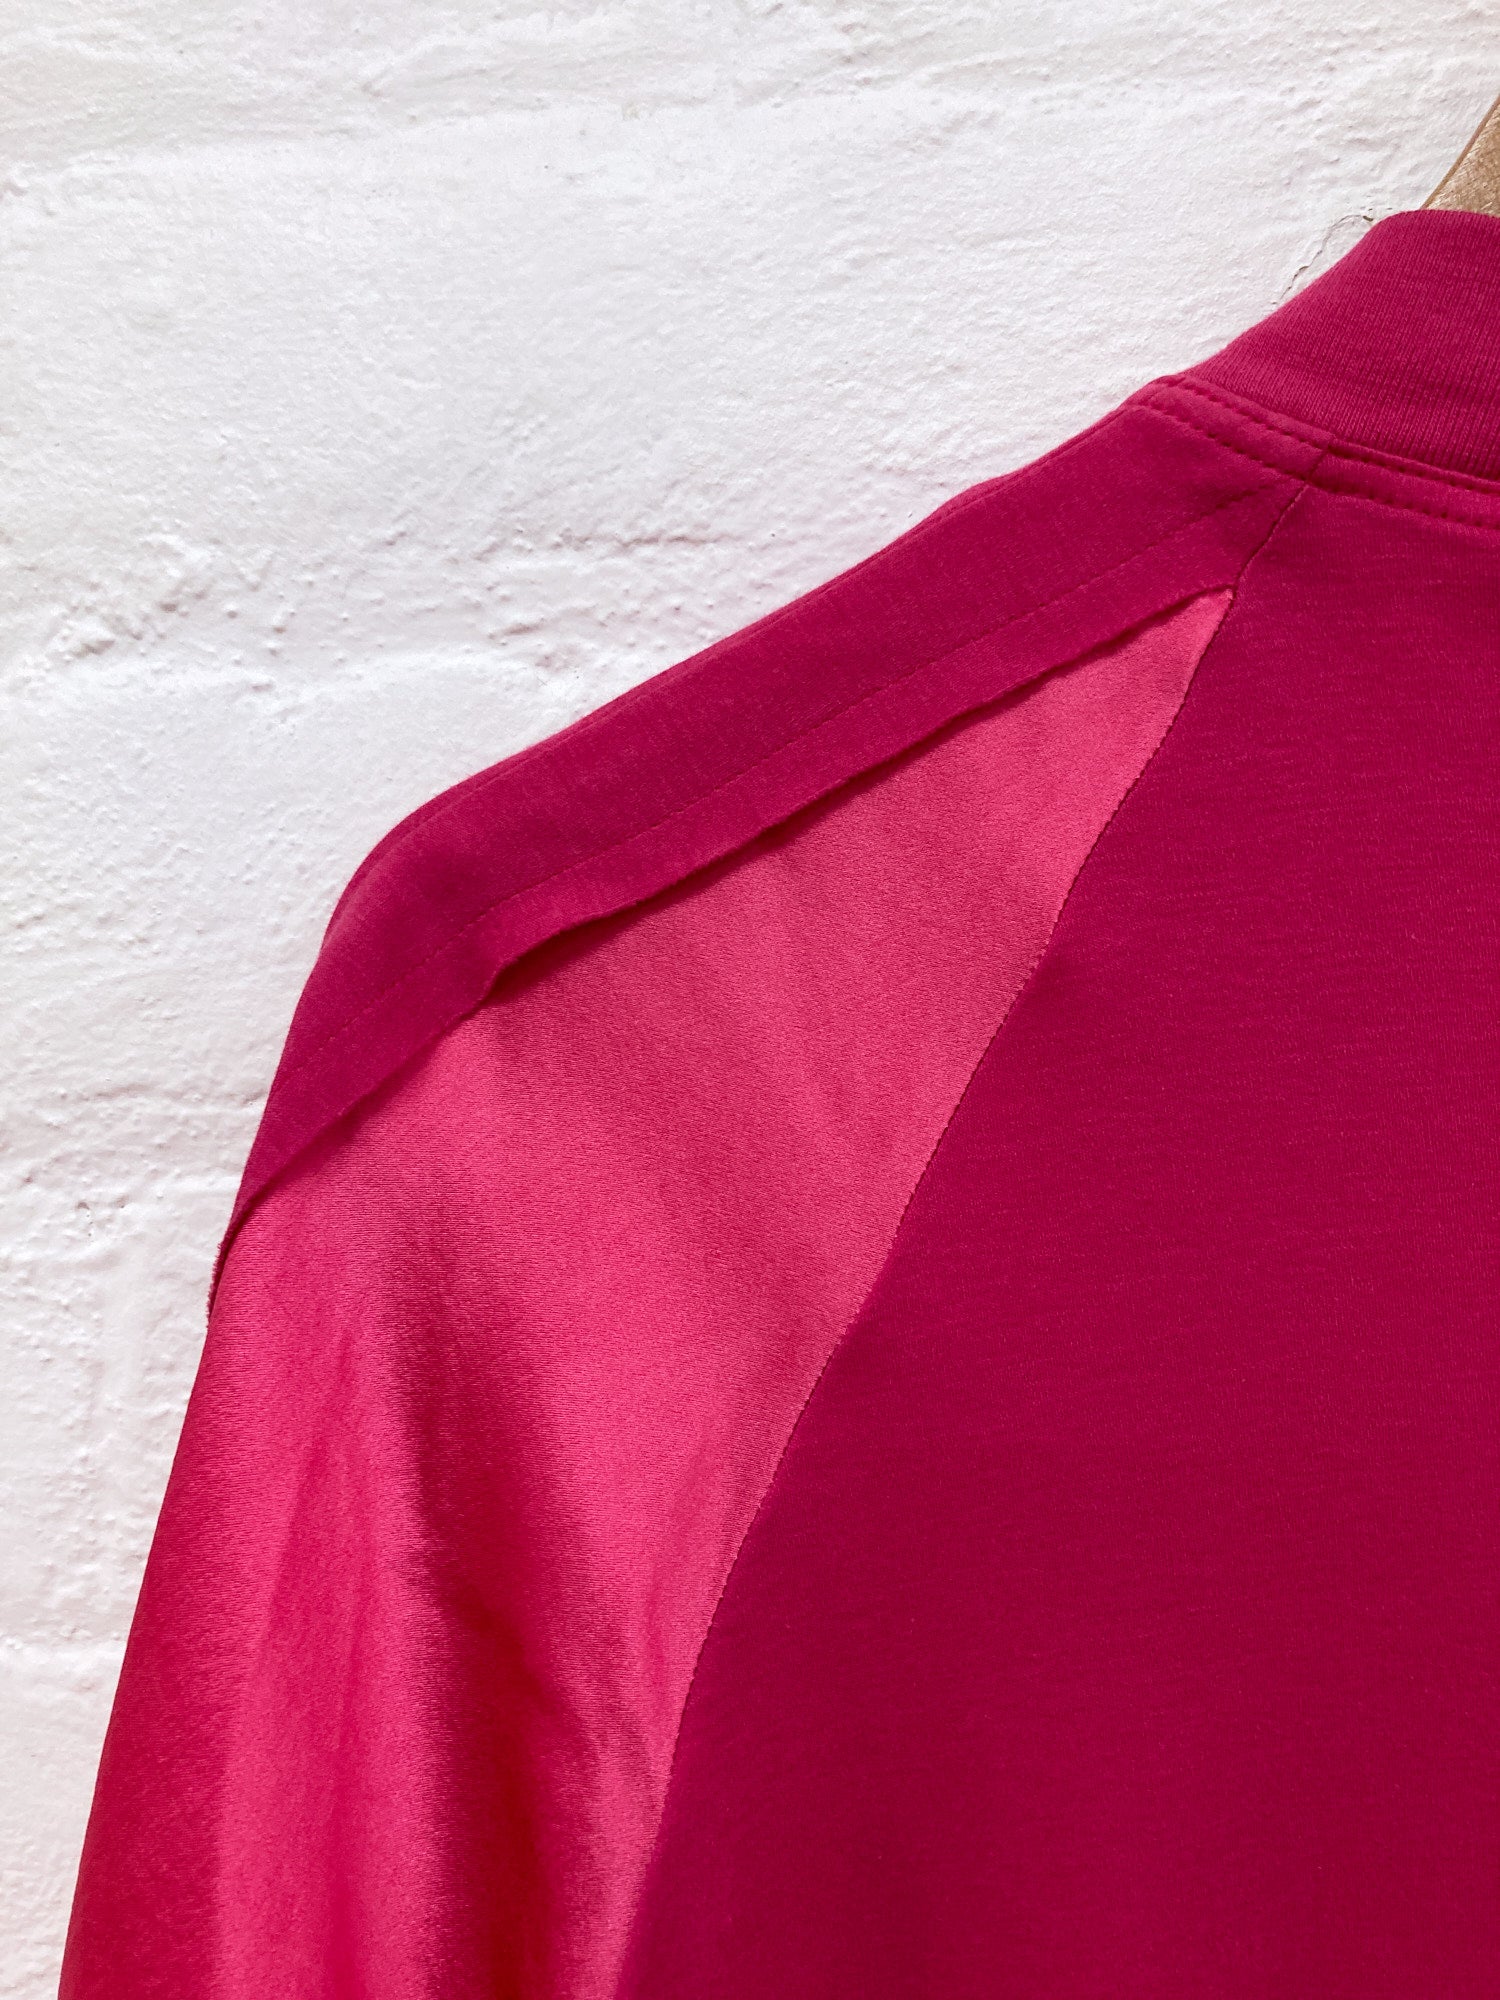 Martine Sitbon fuschia pink silk and cotton jersey zip jacket - size 38